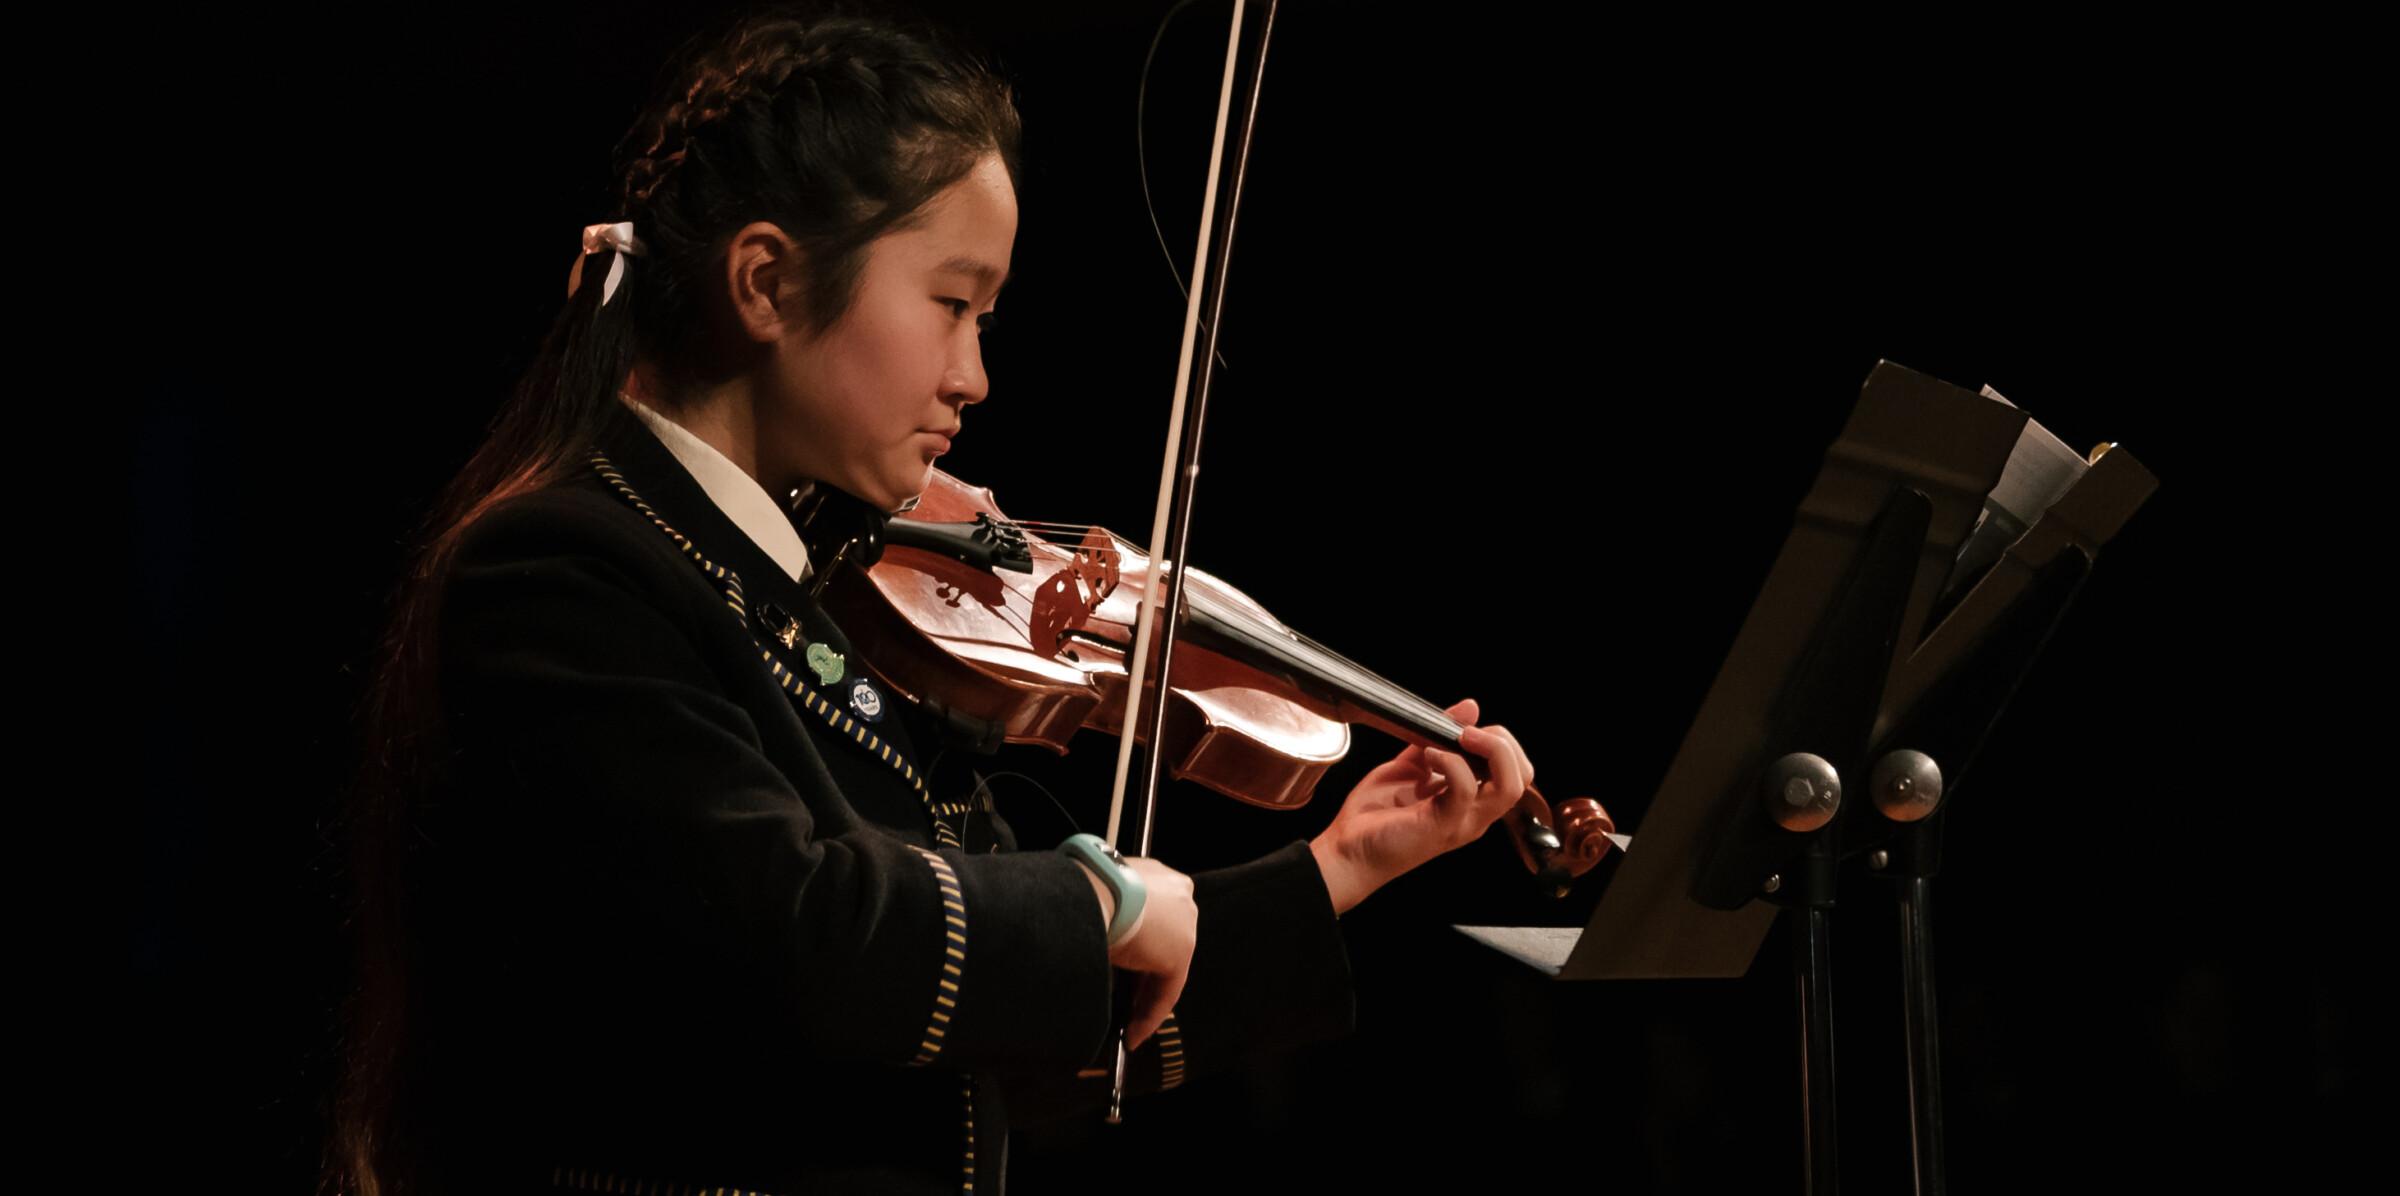 Junior School Kew music's bright performances warming up this winter